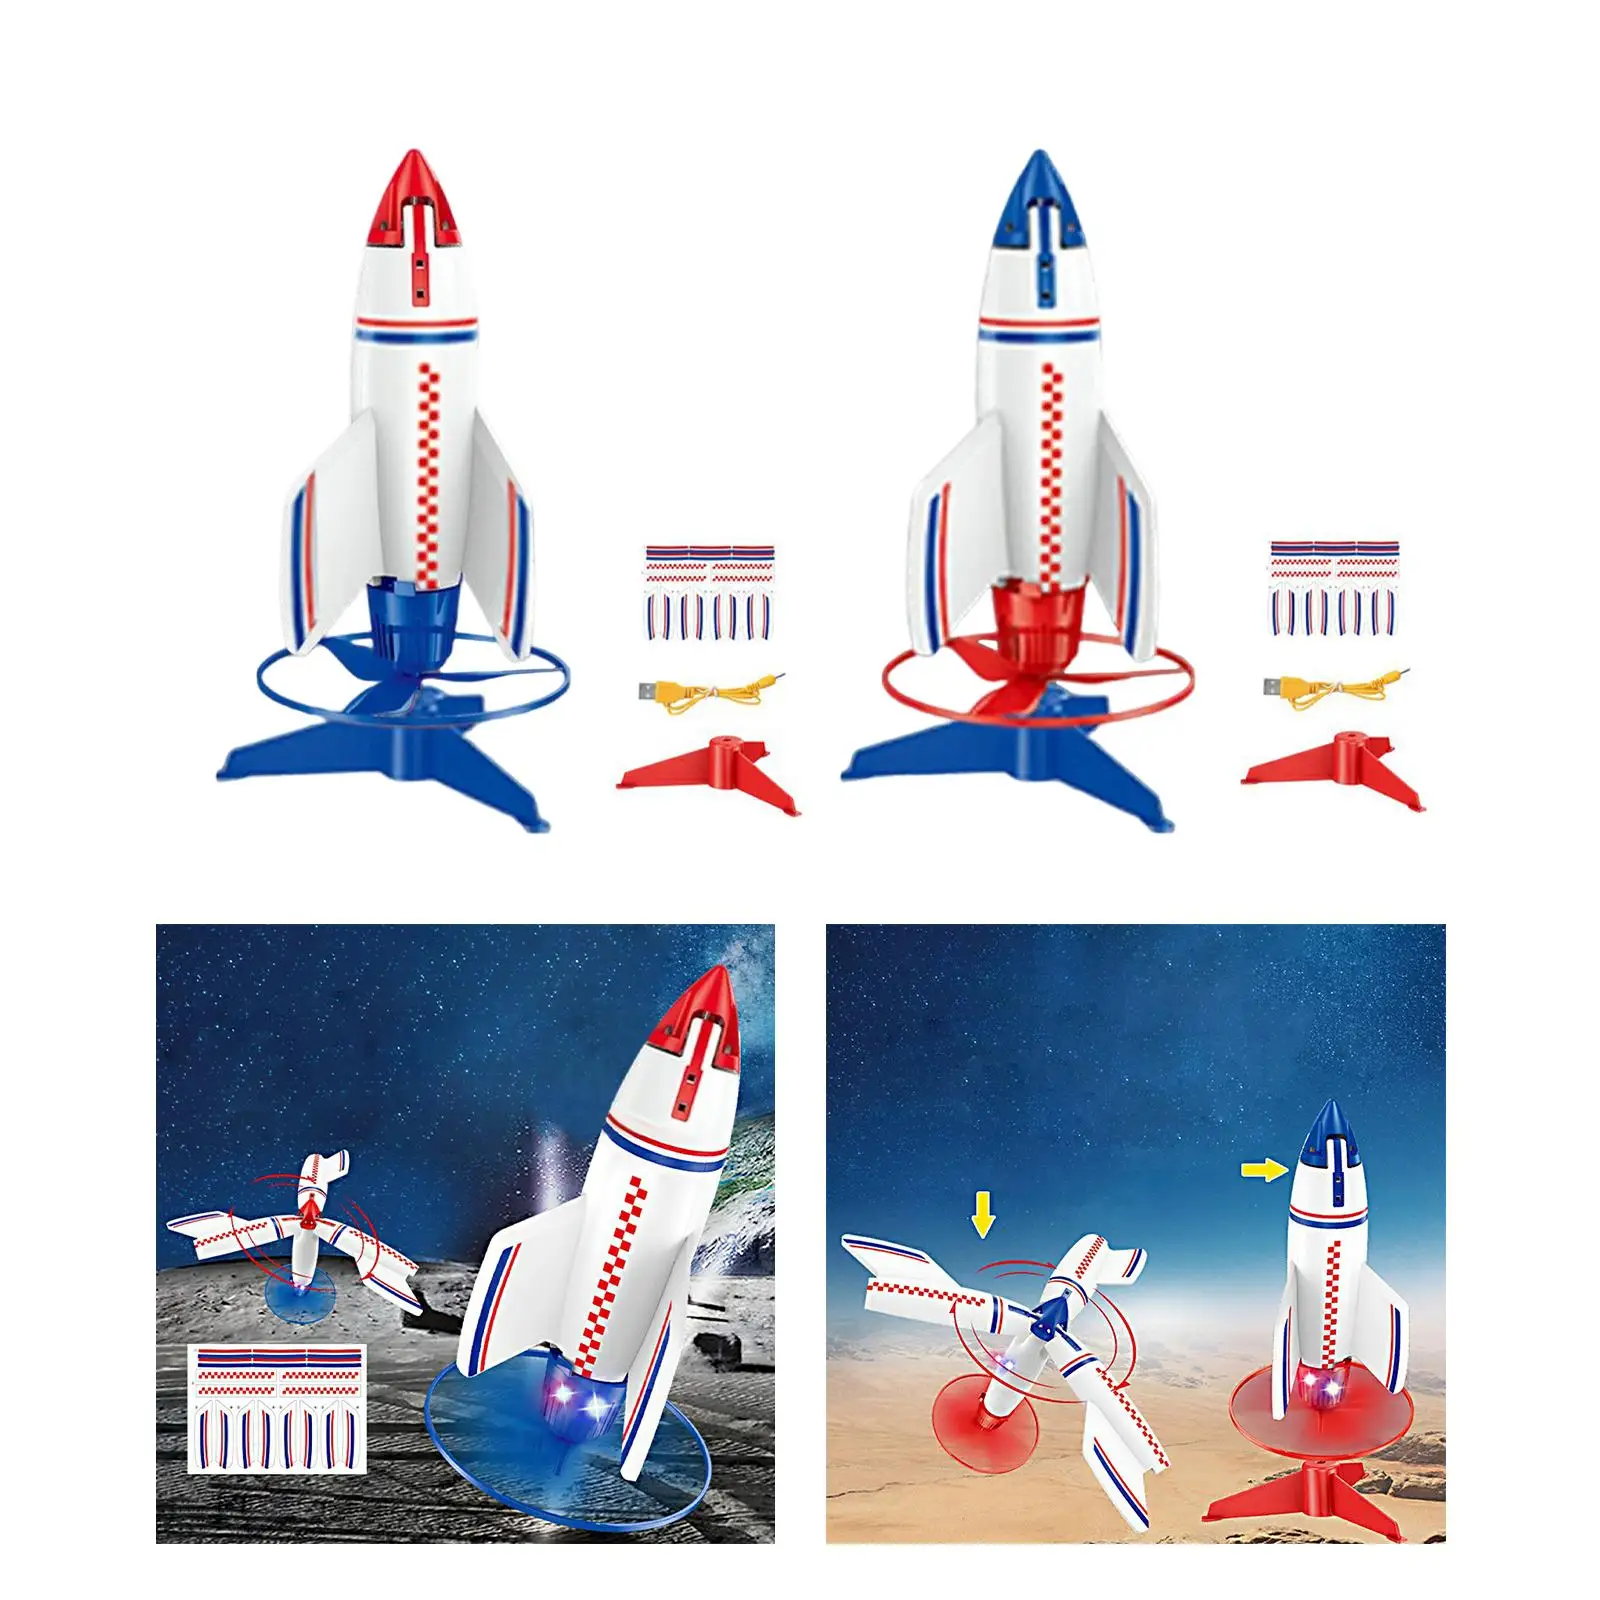 rocket Launcher Toys with Light Foam Rockets Games Activities